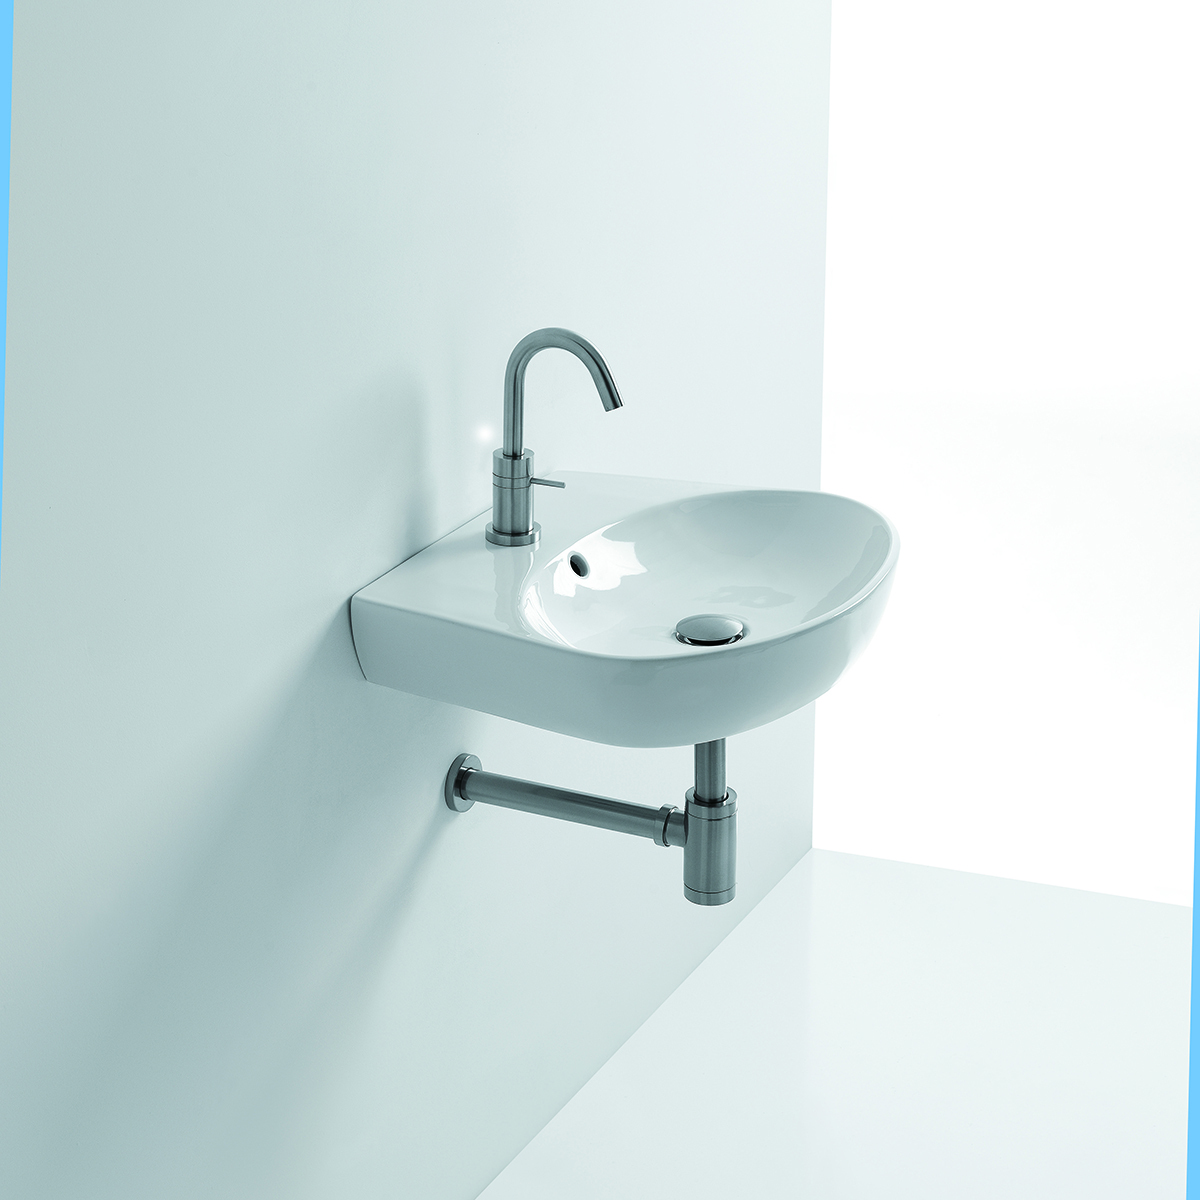 H10 40O, 15.7 x 16.9 x 4.0, Wall Mounted or Vessel Bathroom Sinkin Ceramic White